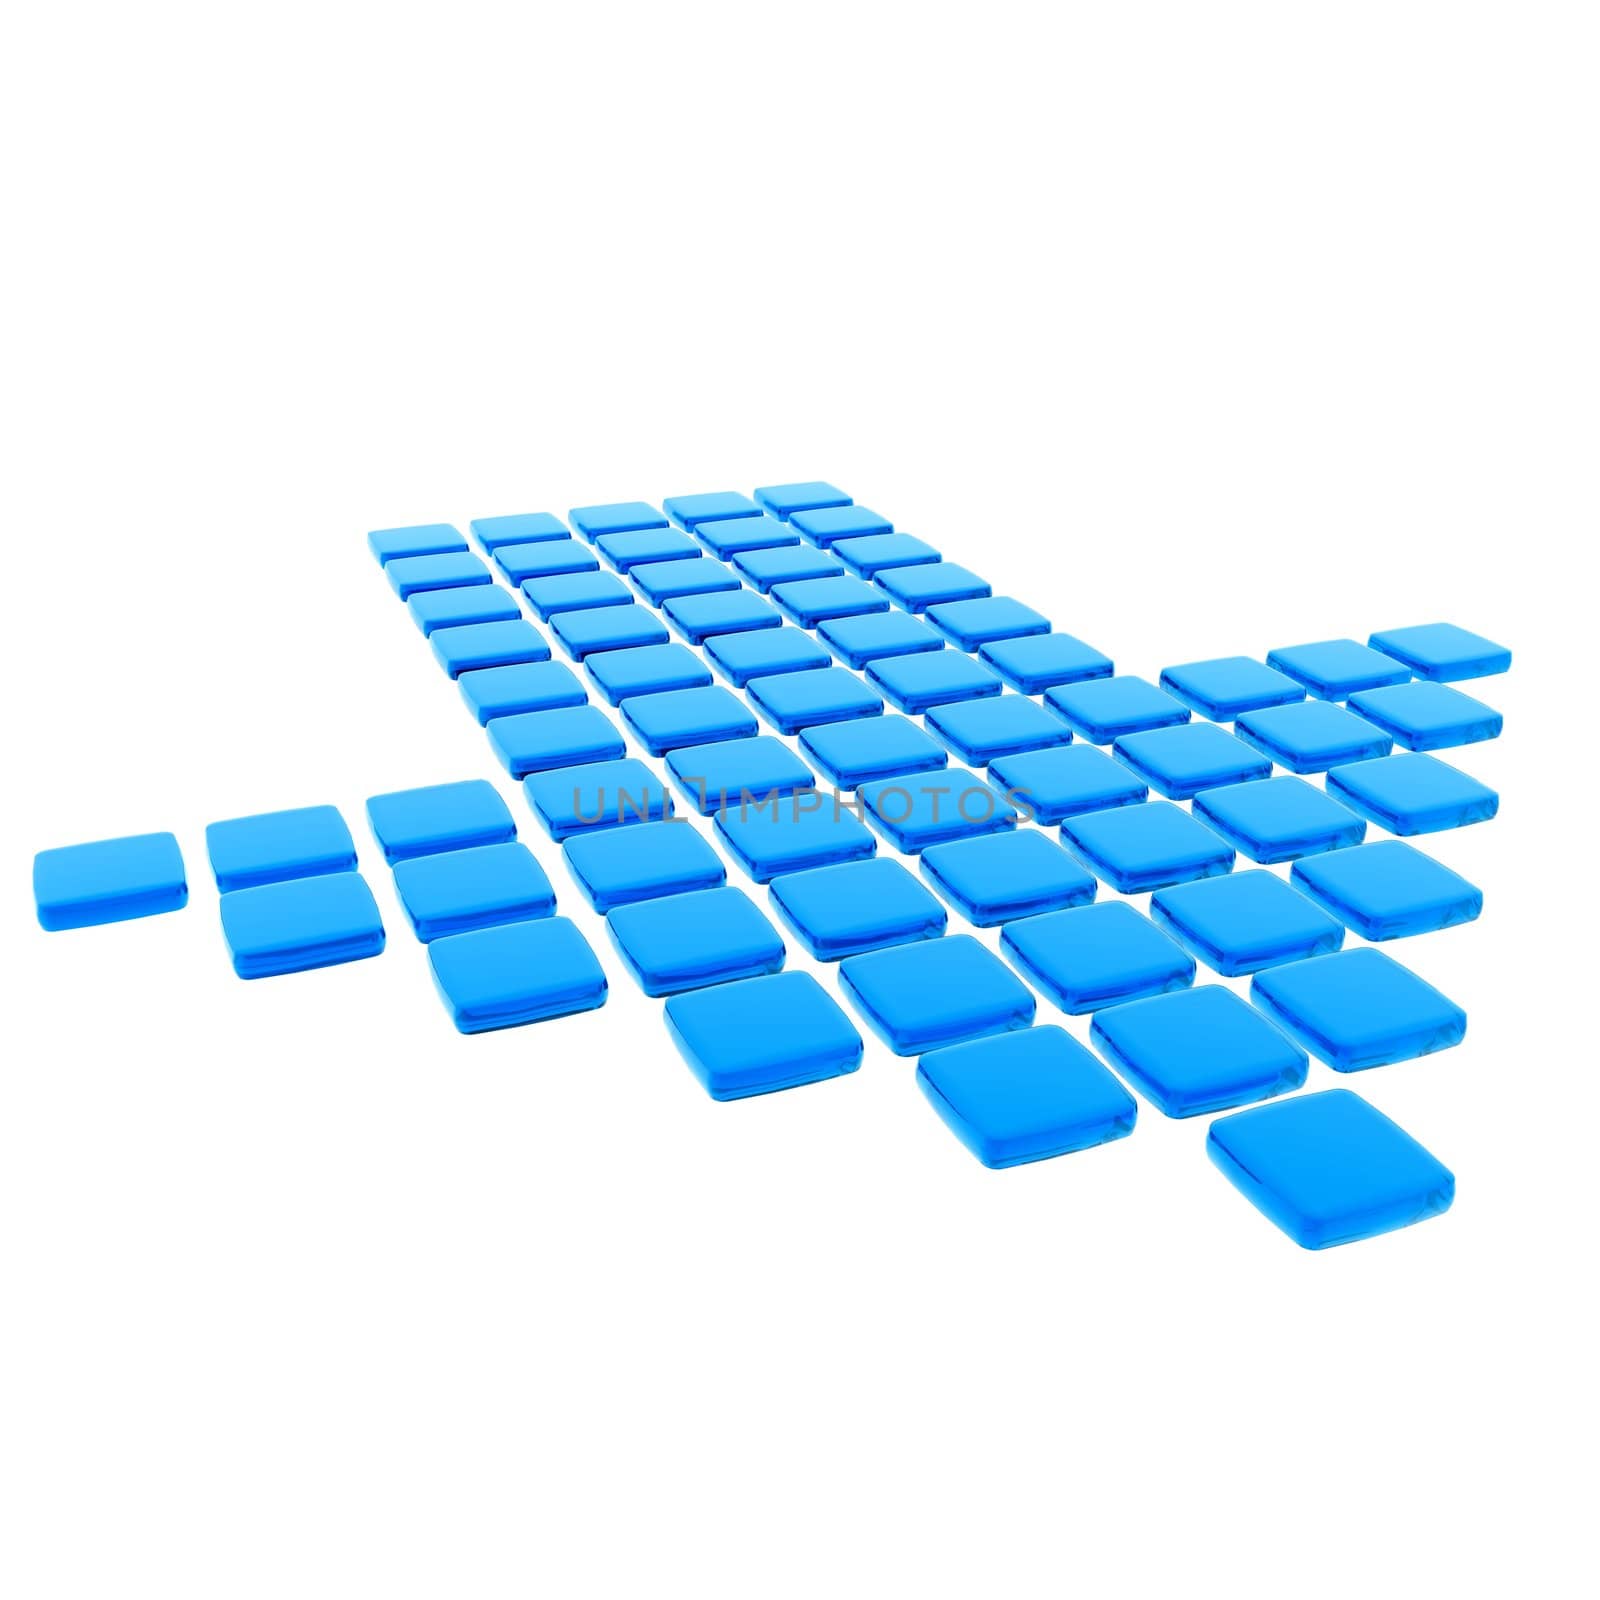 A blue arrow consisting of deep blue tiles.